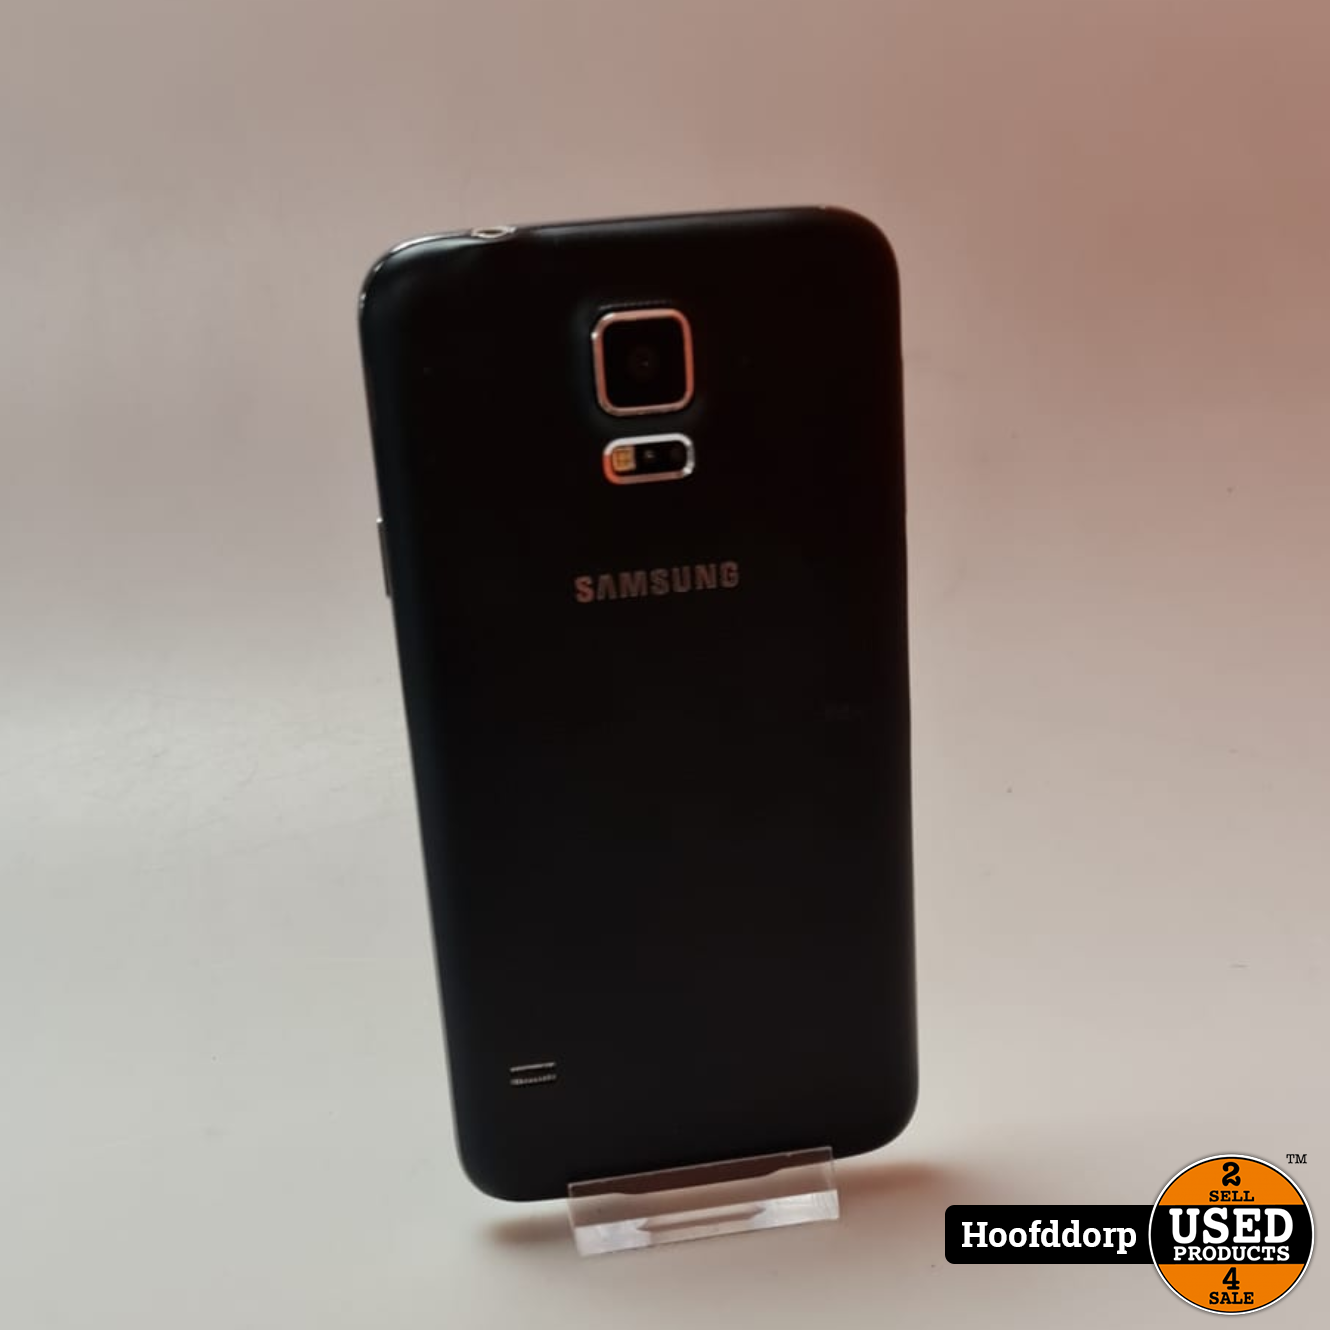 Ontrouw Overdreven Neerwaarts Samsung Galaxy S5 neo - Used Products Hoofddorp